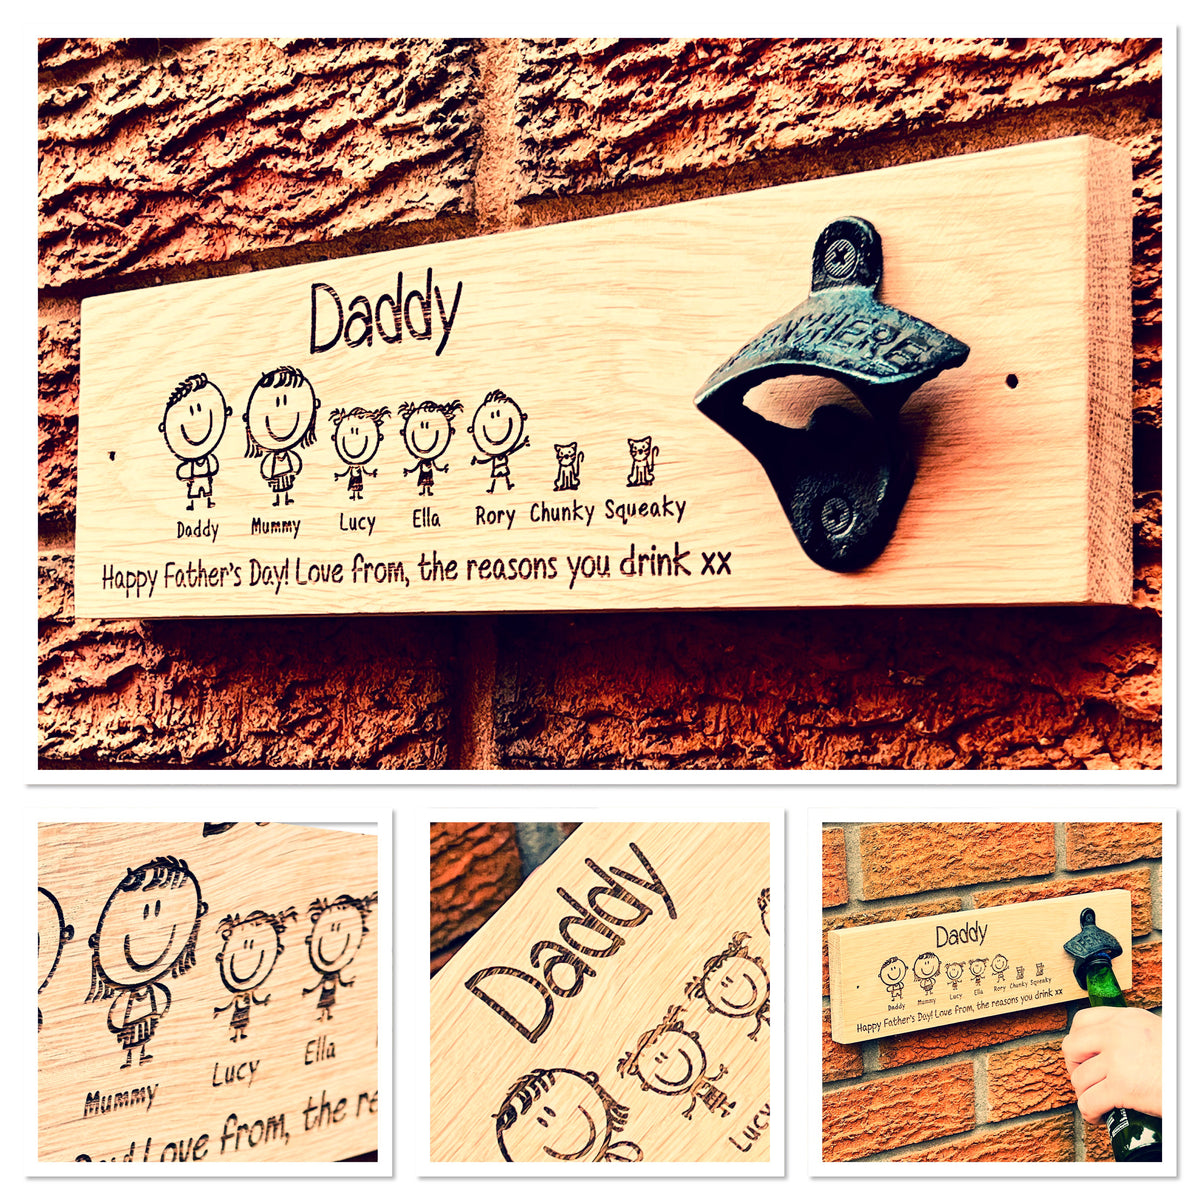 OUR BEST SELLER! “Dad’s Family” Solid Oak Bottle Opener Plaque